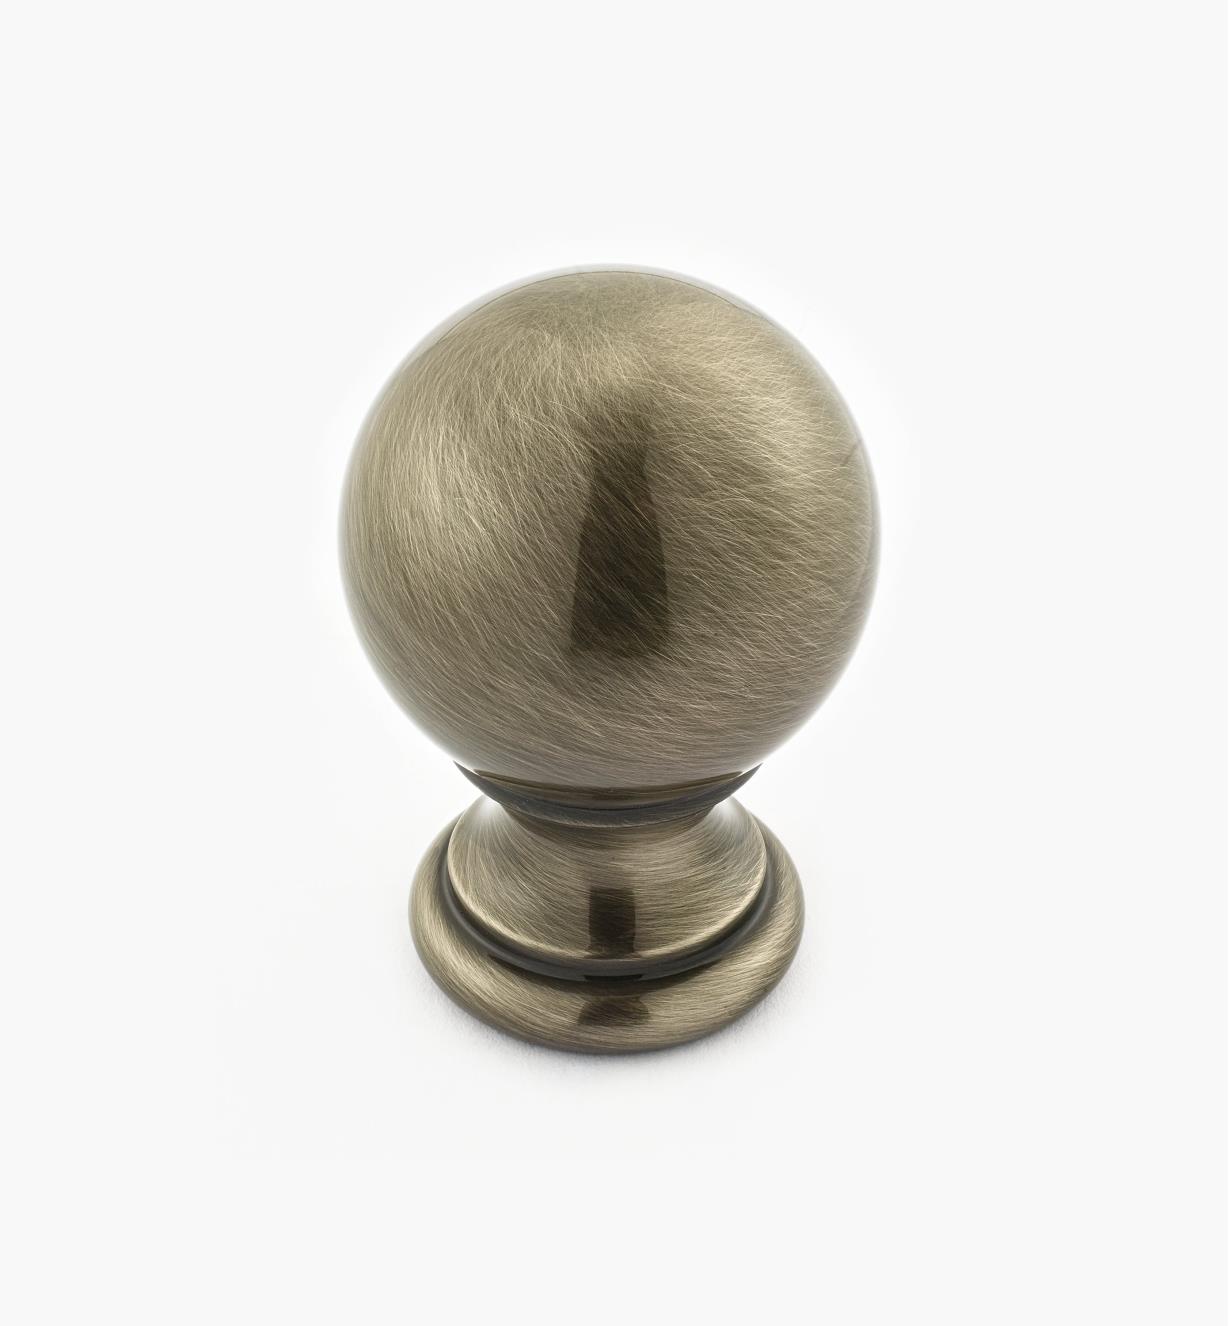 02W3304 - Antique Nickel Suite - 1 1/8" x 1 3/4" Turned Brass Ball Knob